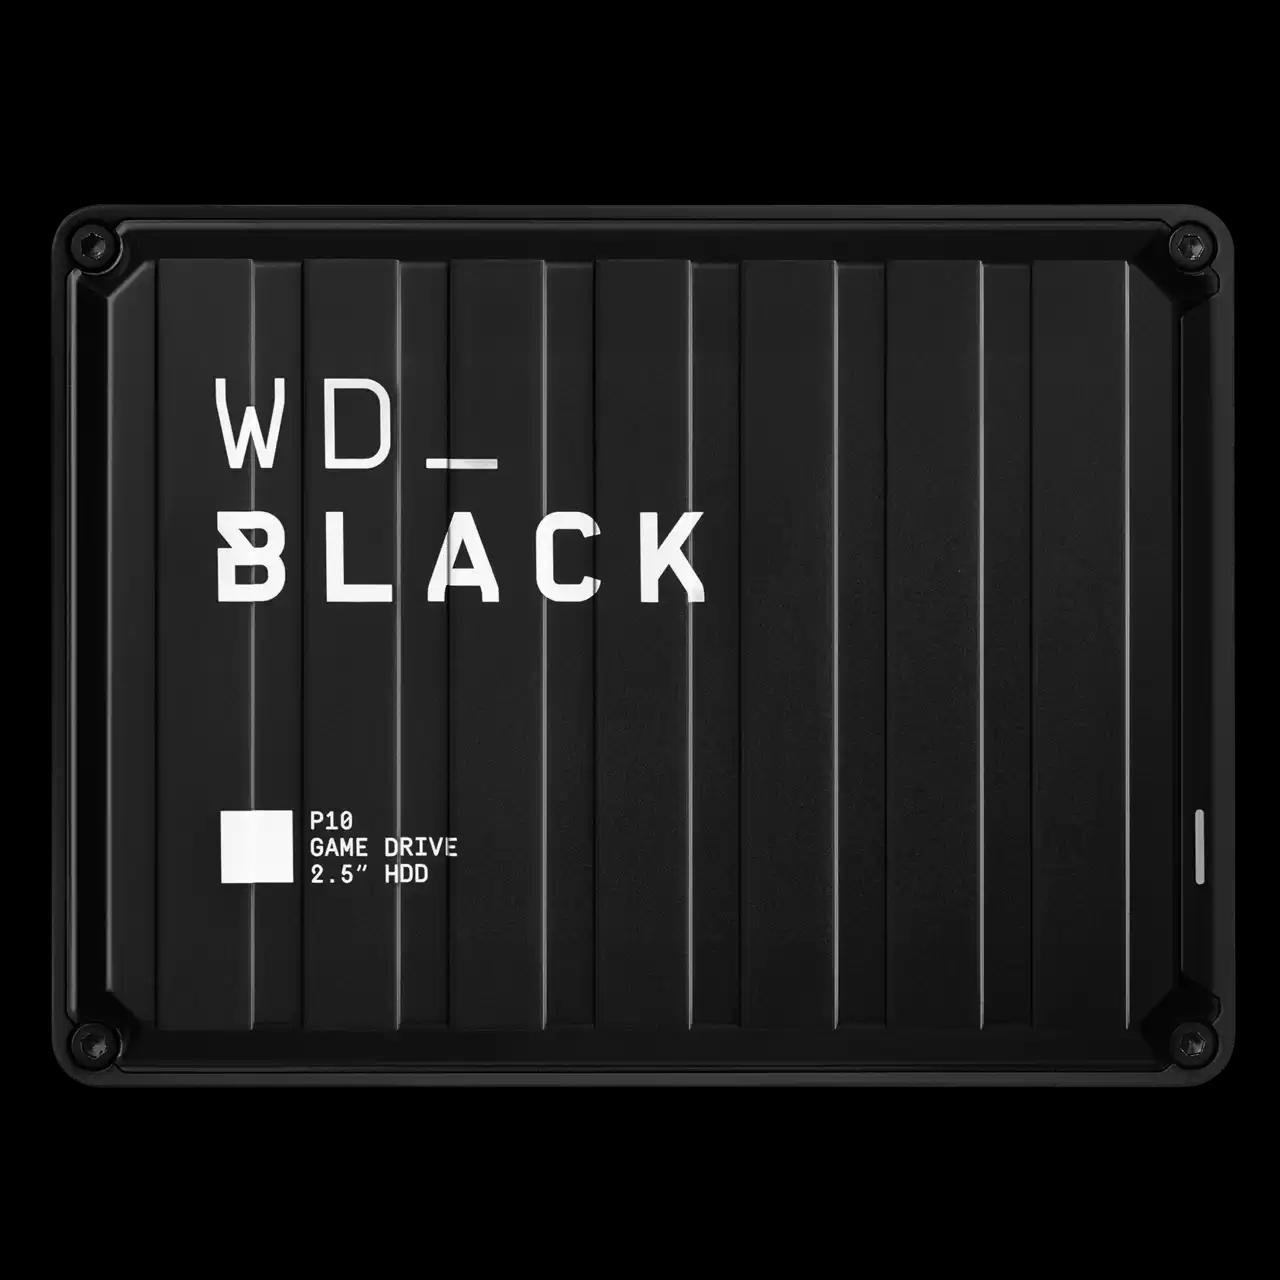 WESTERN DIGITAL WD BLACK P10 GAME DRIVE 4TB